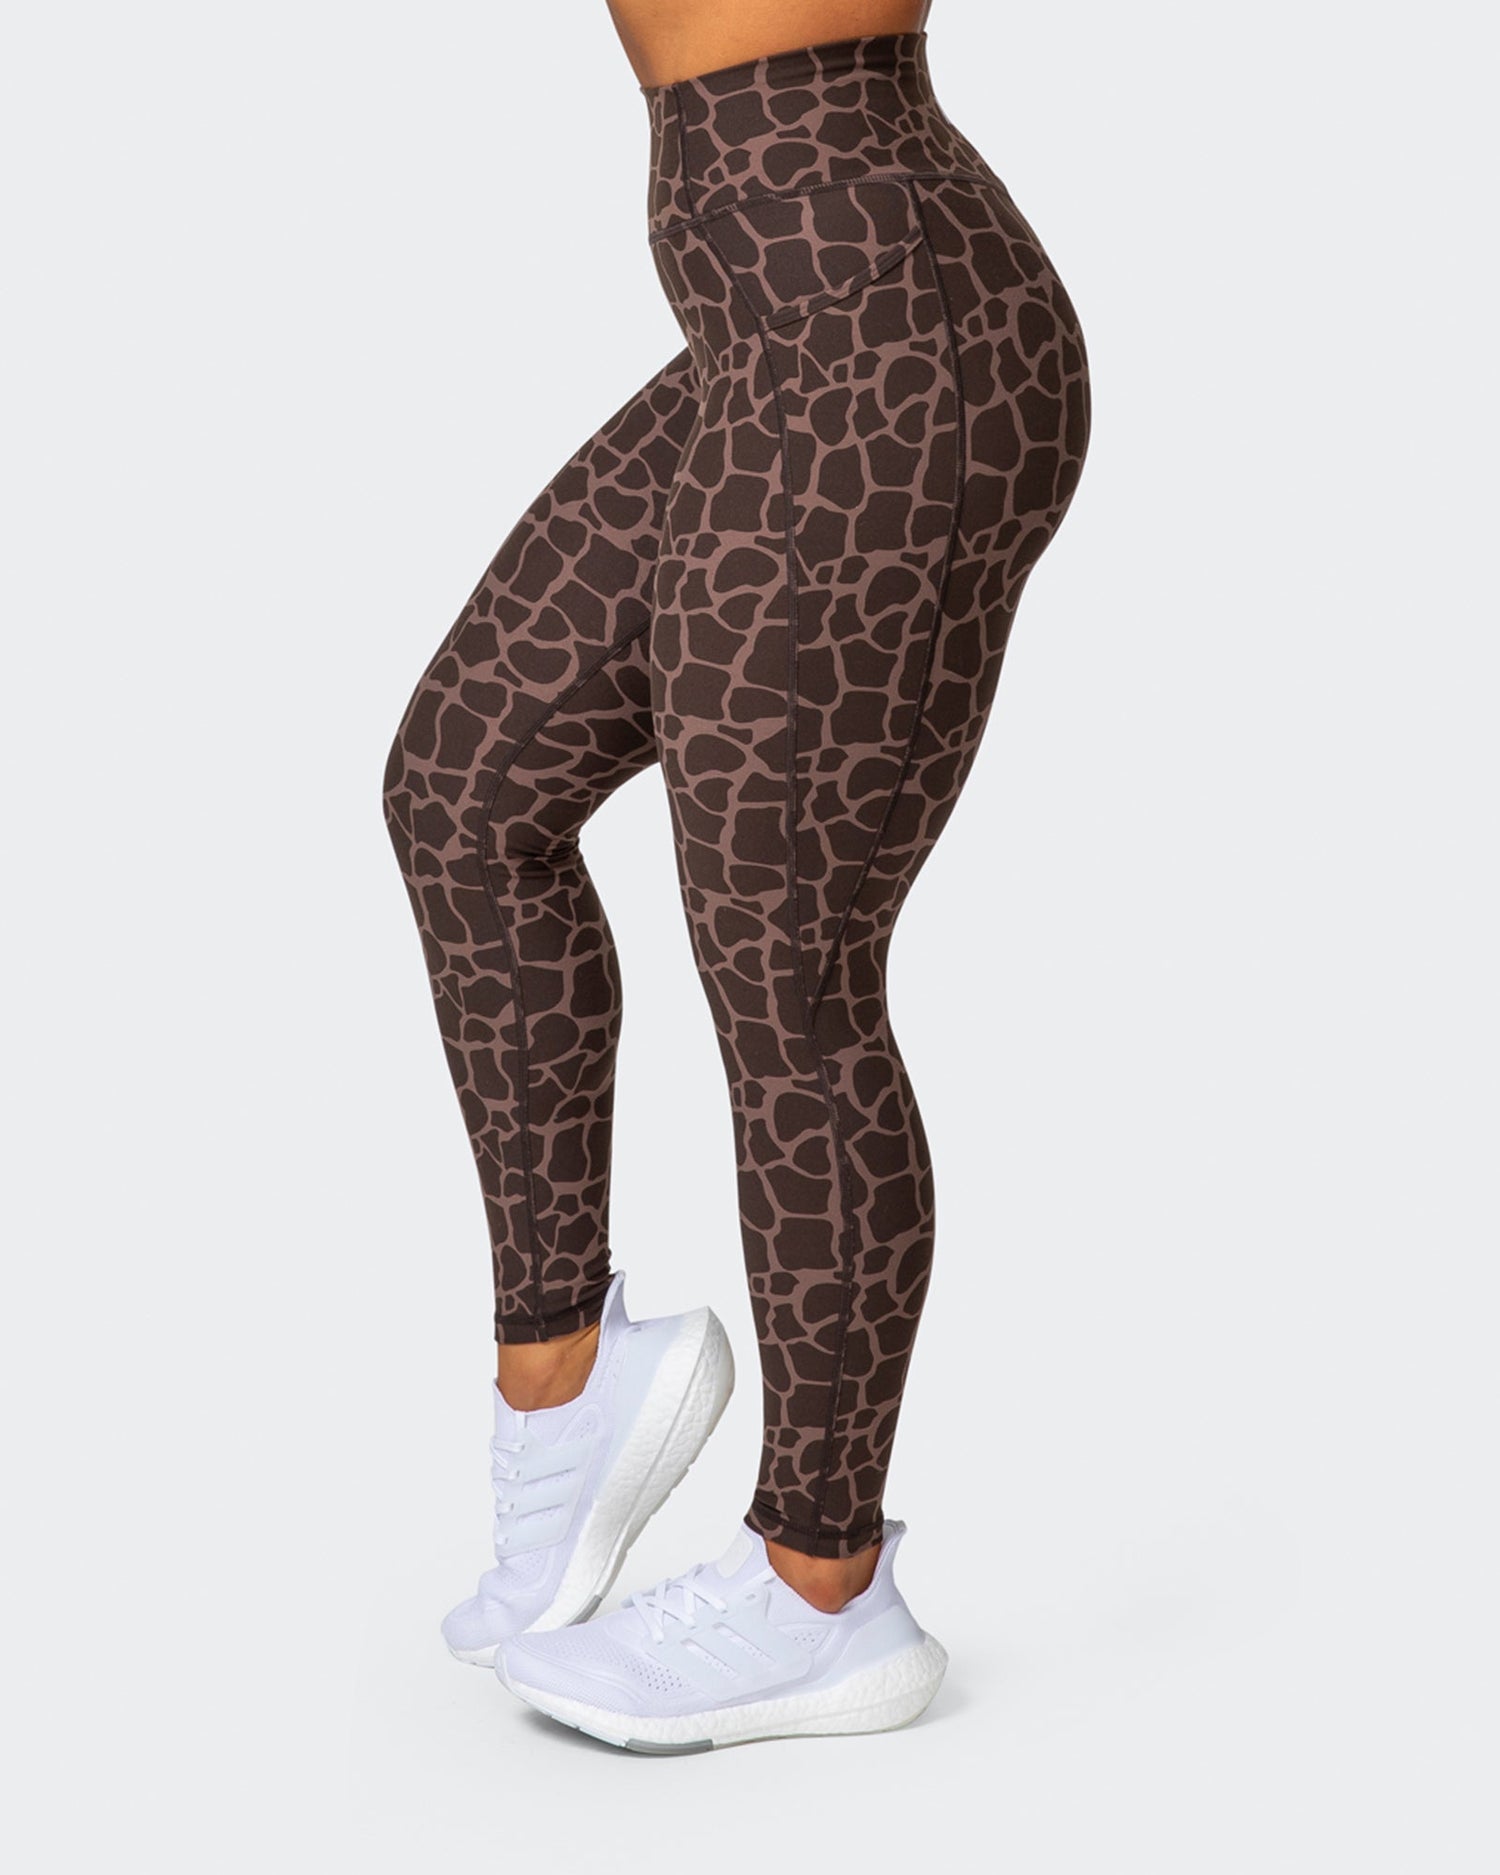 Giraffe Leggings - Giraffe Animal Print Tights for Women Brown : :  Clothing, Shoes & Accessories